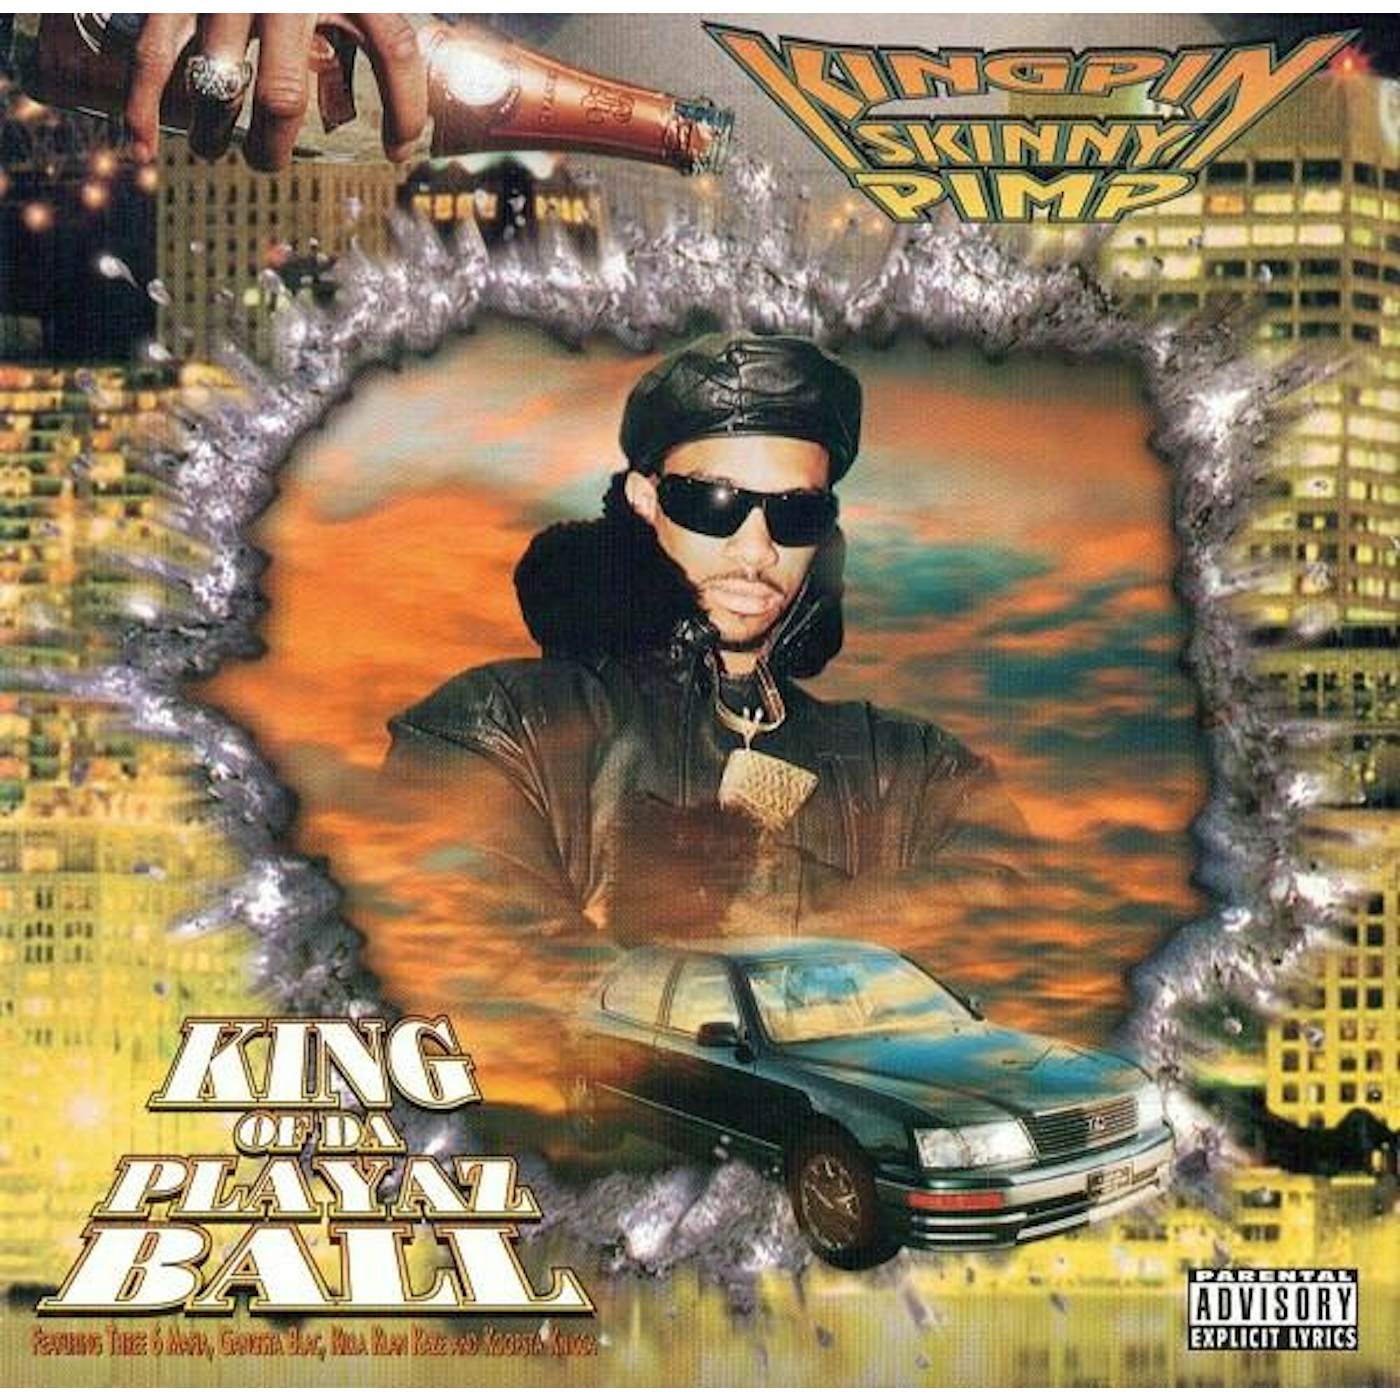 Kingpin Skinny Pimp KING OF DA PLAYAZ BALL (2LP) Vinyl Record